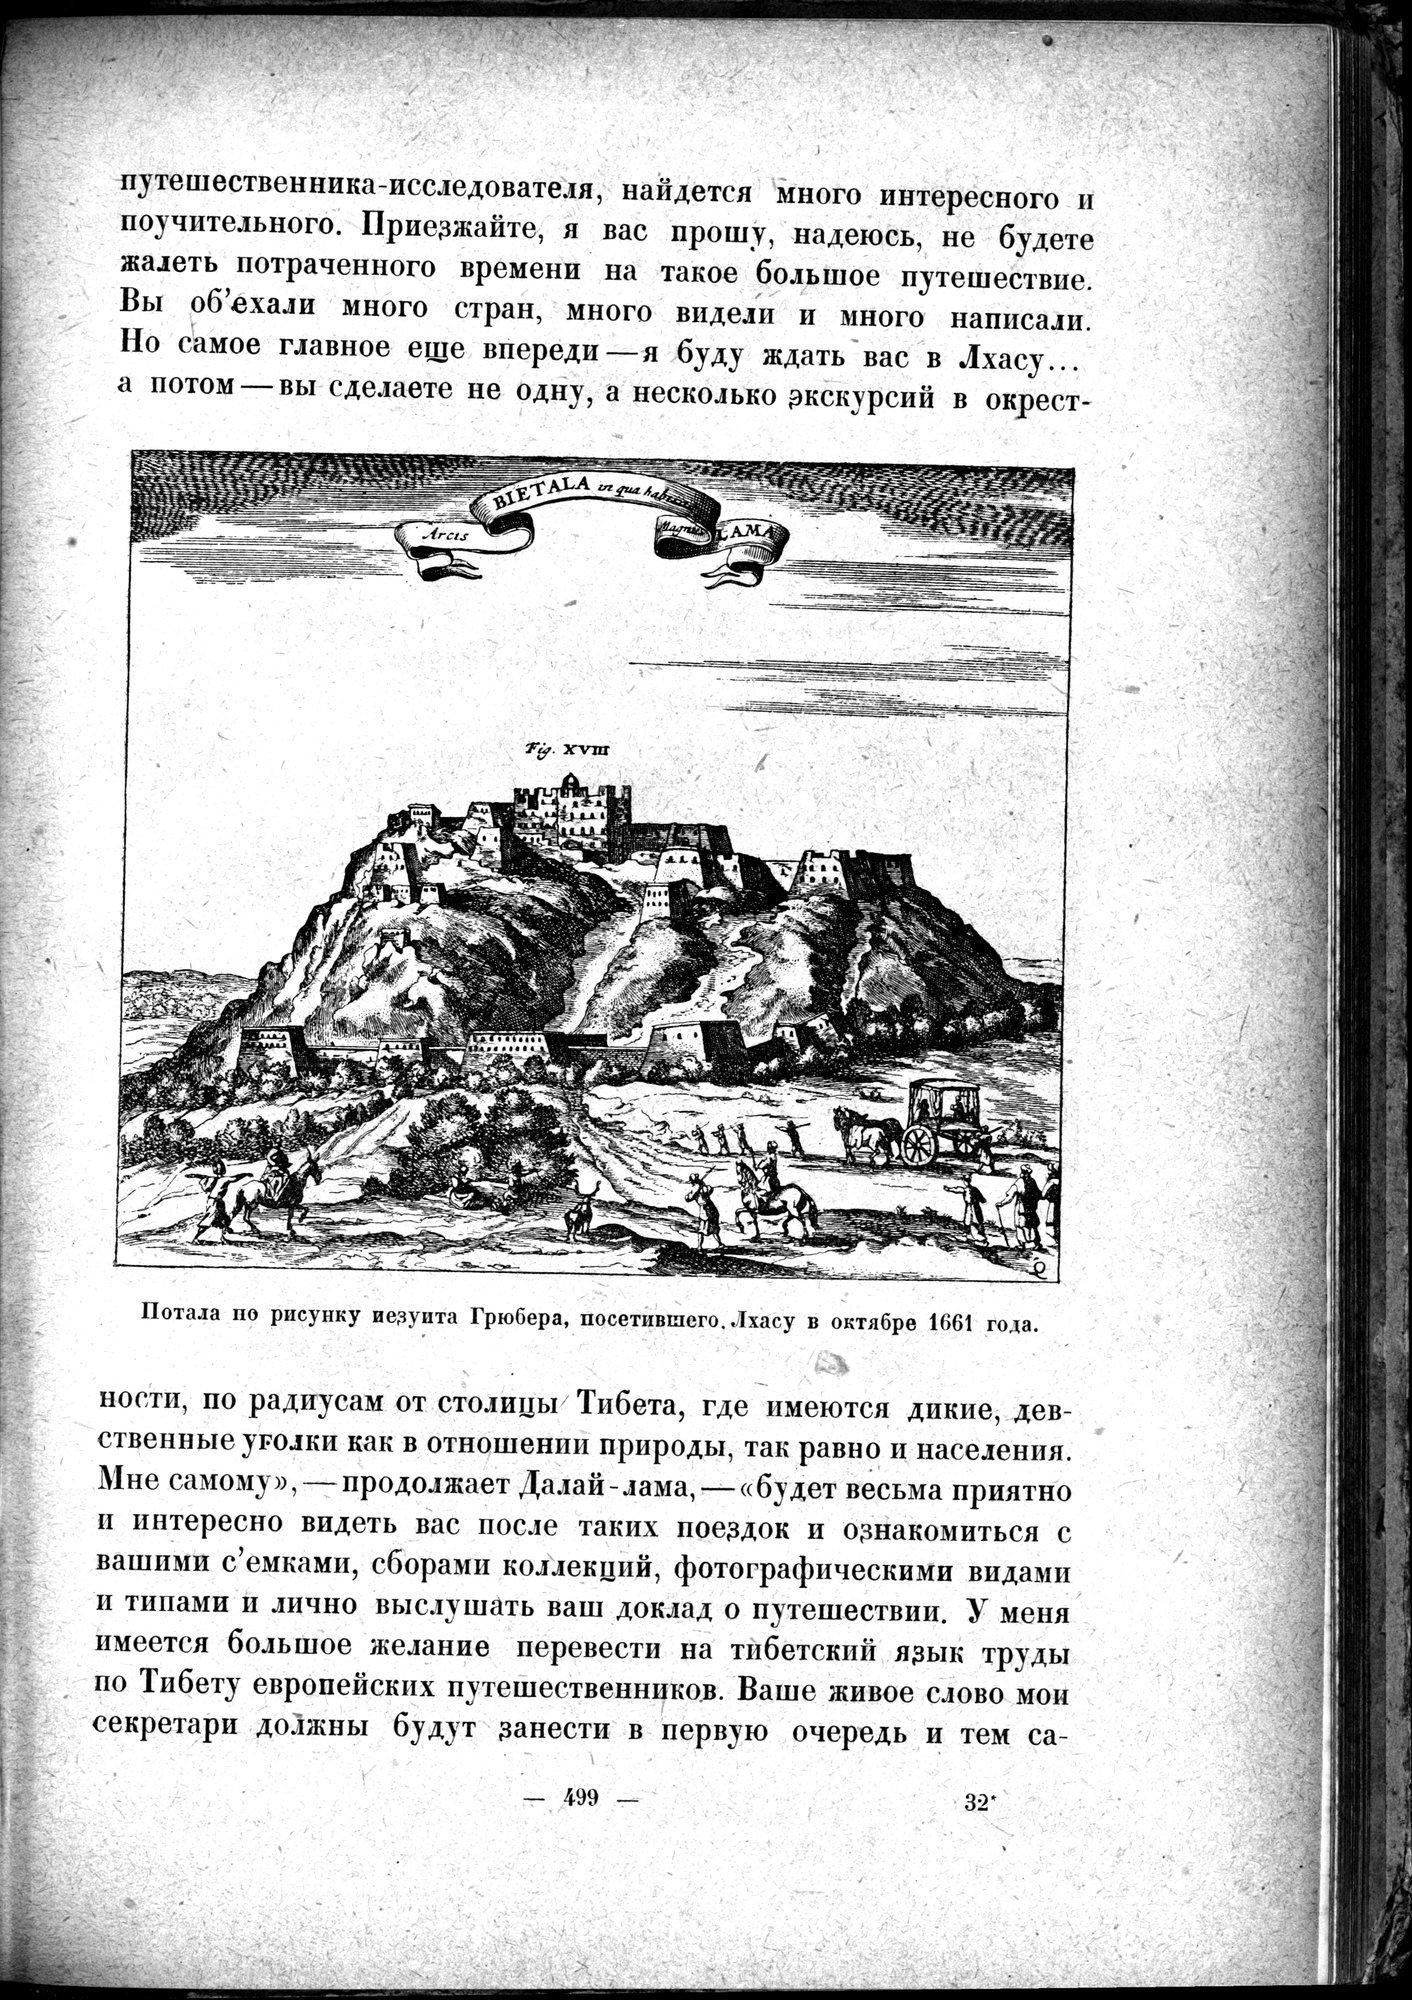 Mongoliya i Amdo i mertby gorod Khara-Khoto : vol.1 / Page 571 (Grayscale High Resolution Image)